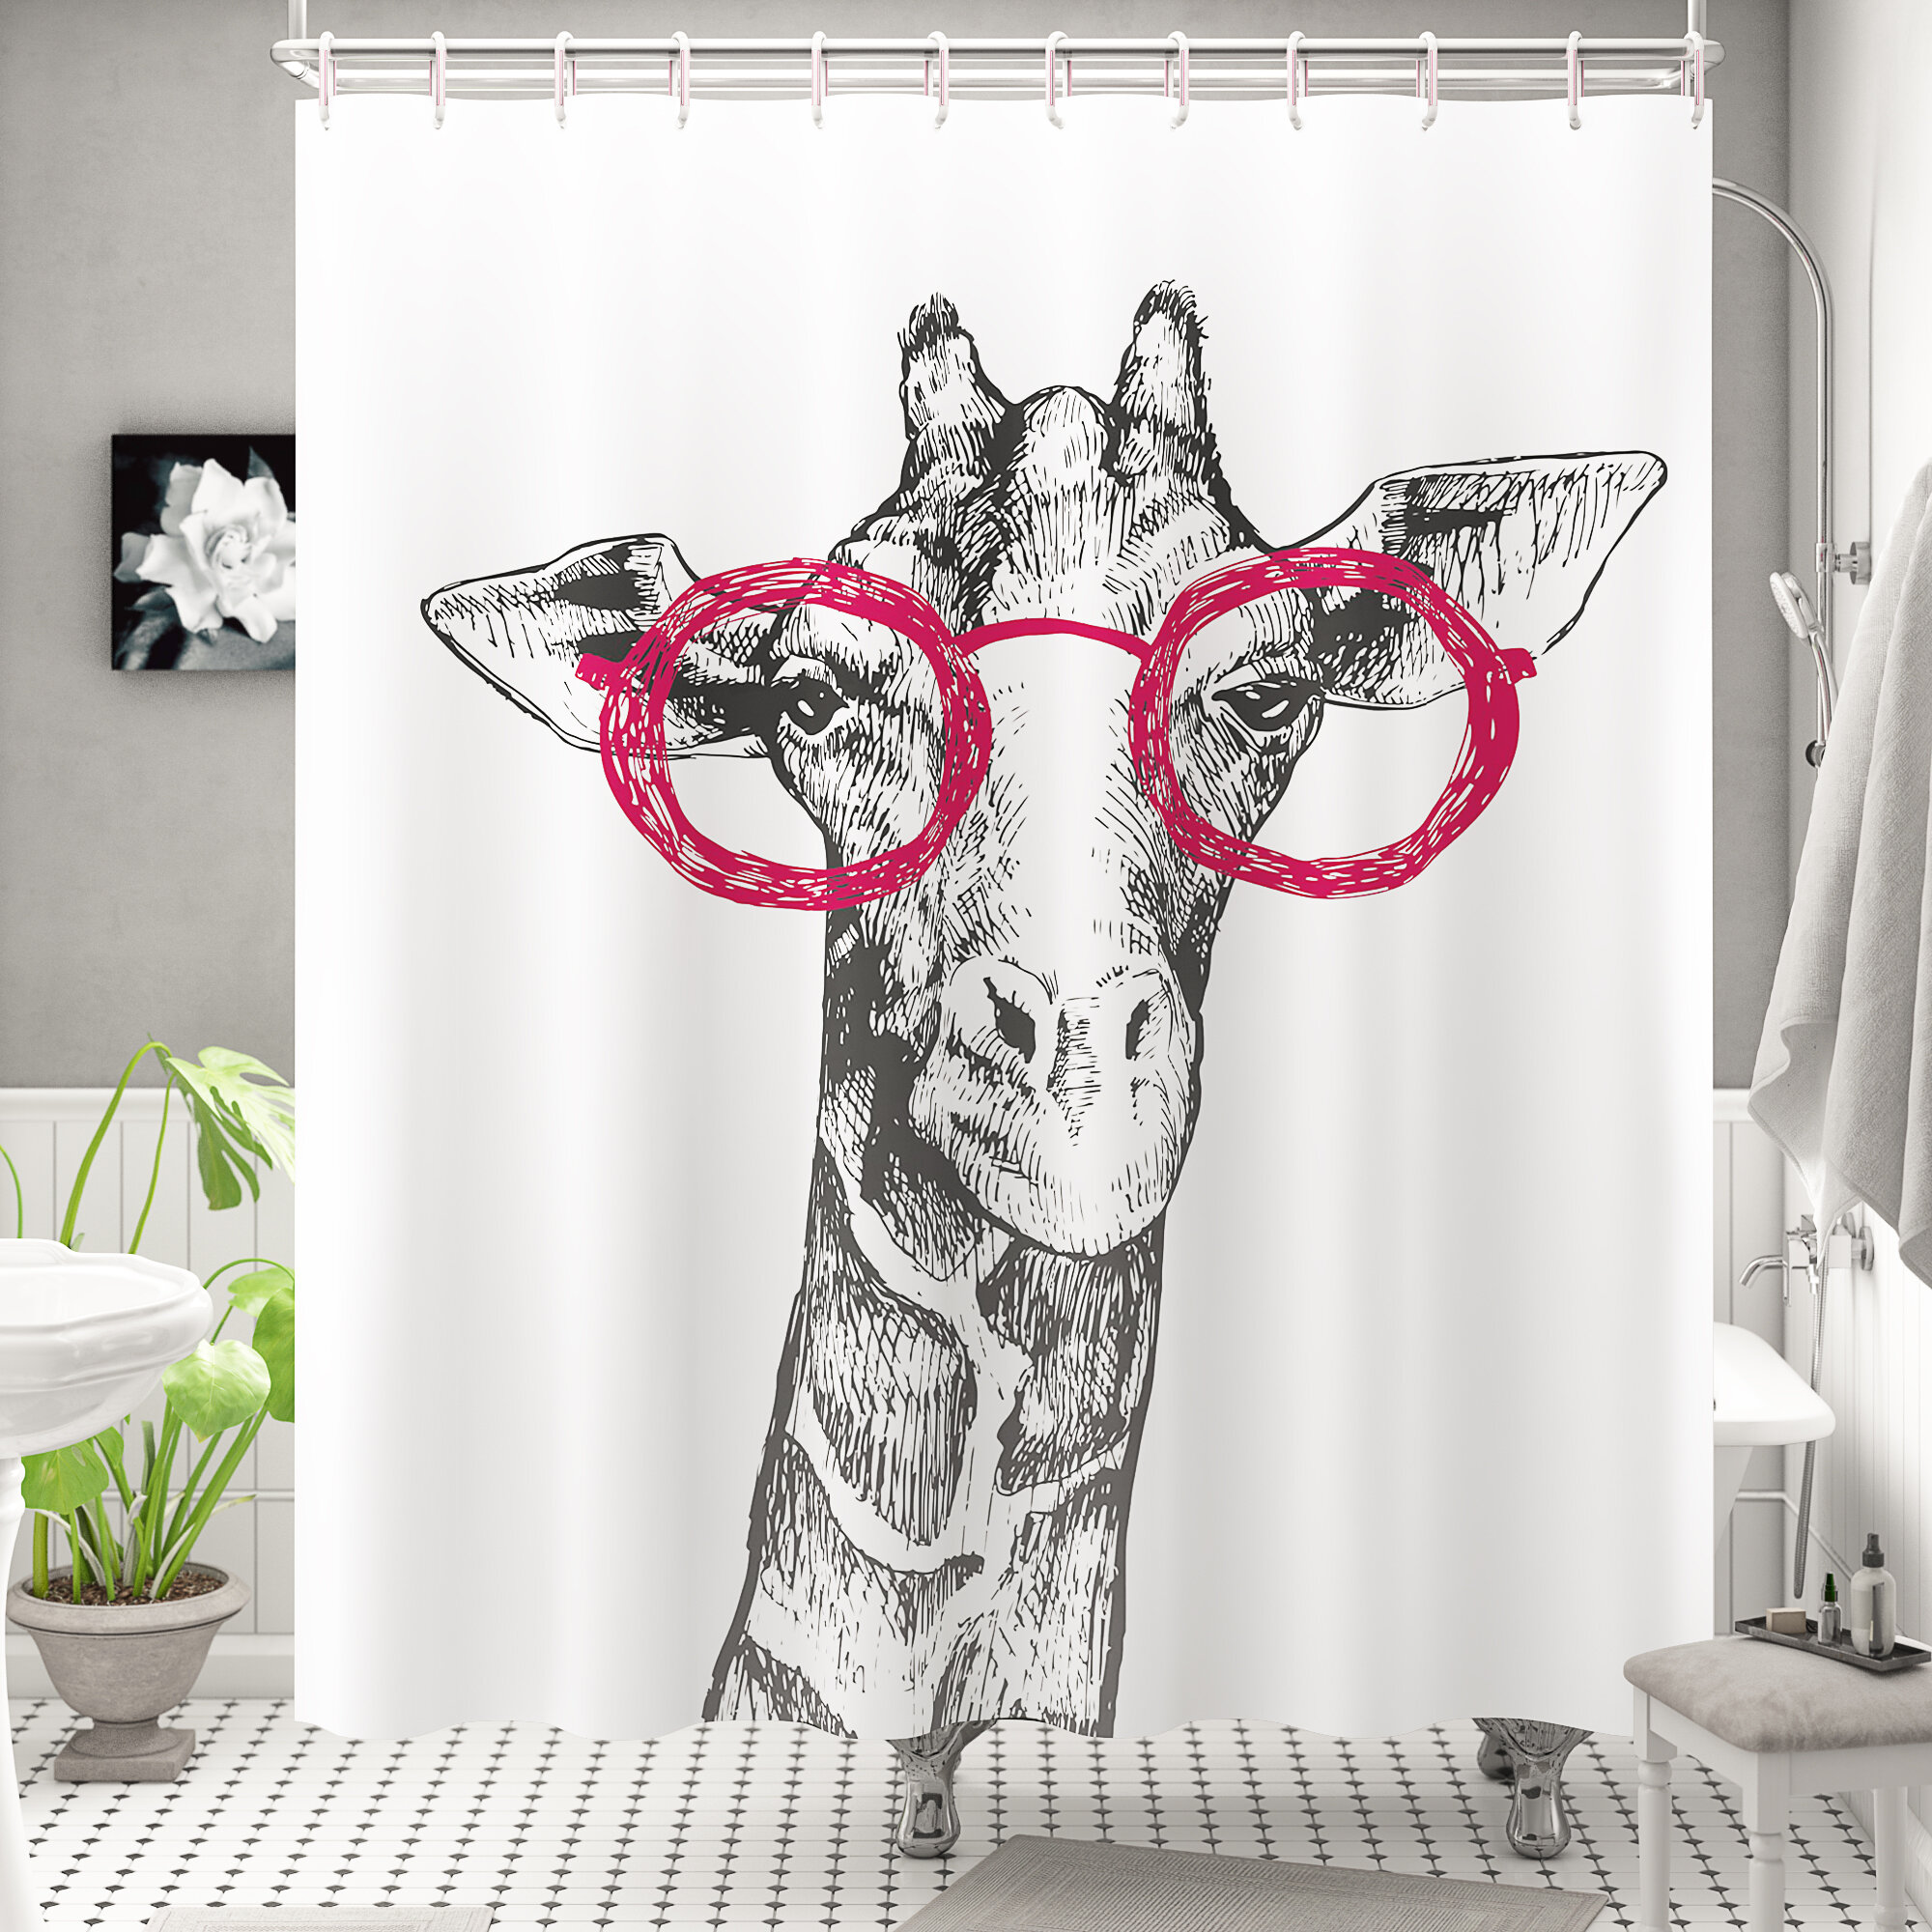 Shower Curtain Bathroom Decor Set Red Flower Ink Painting Art Curtains 12 HOOKS 